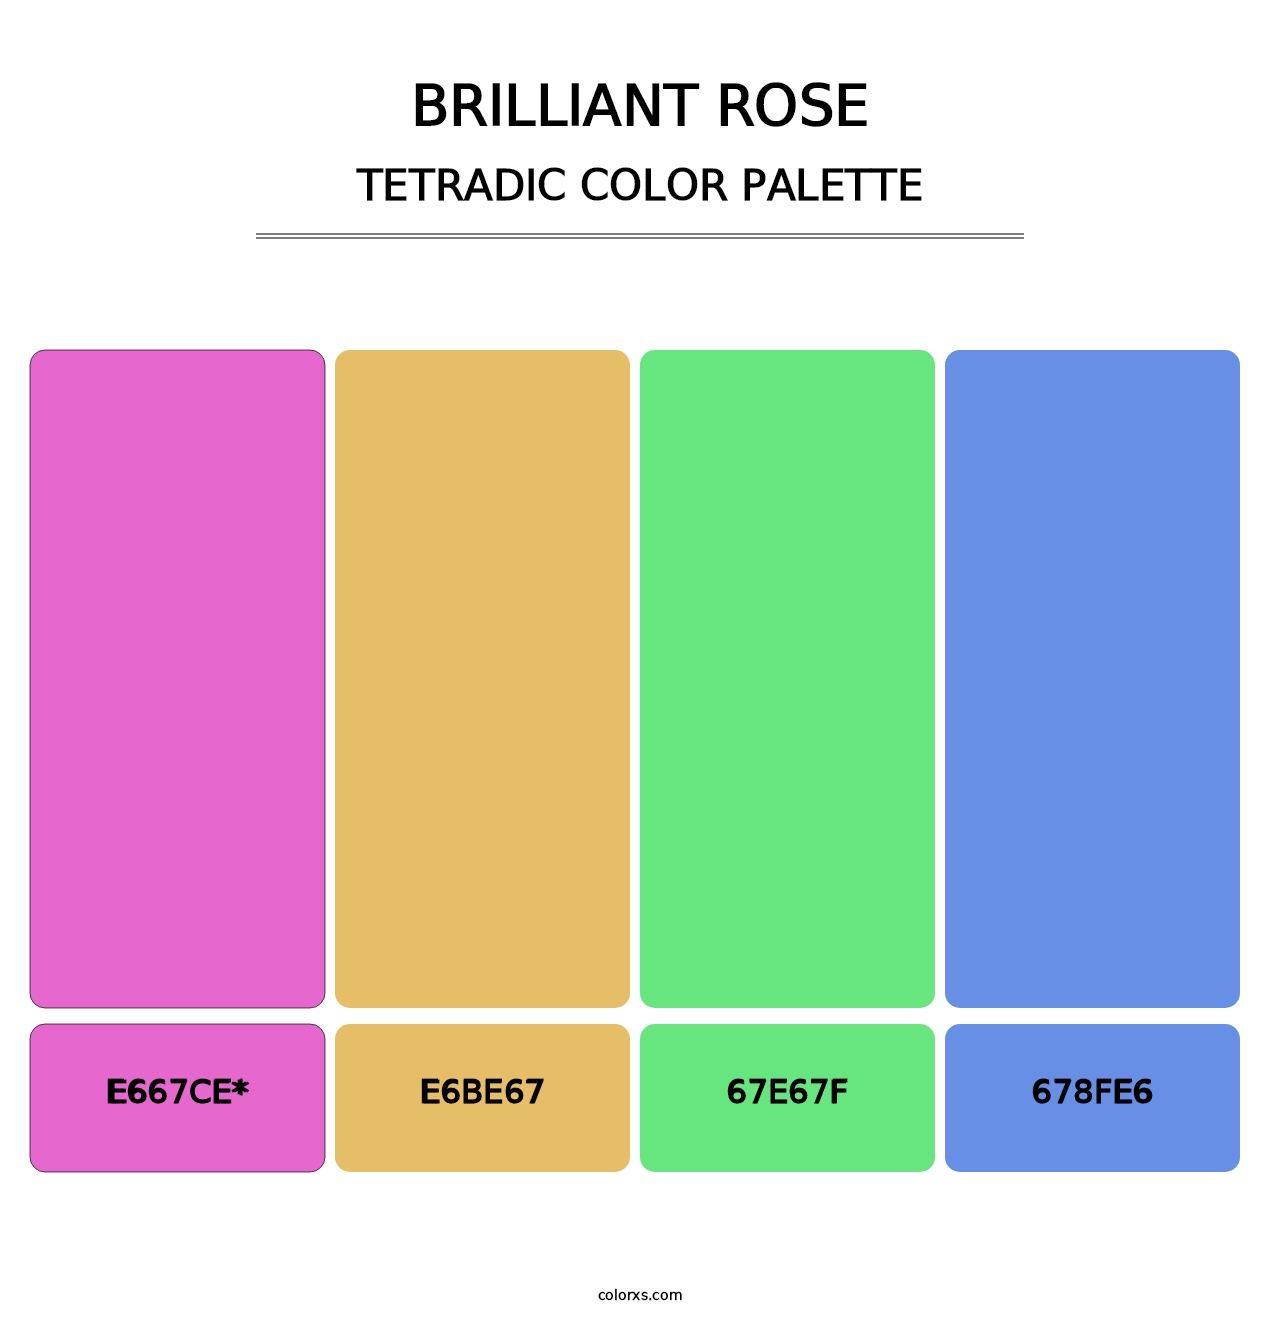 Brilliant Rose - Tetradic Color Palette